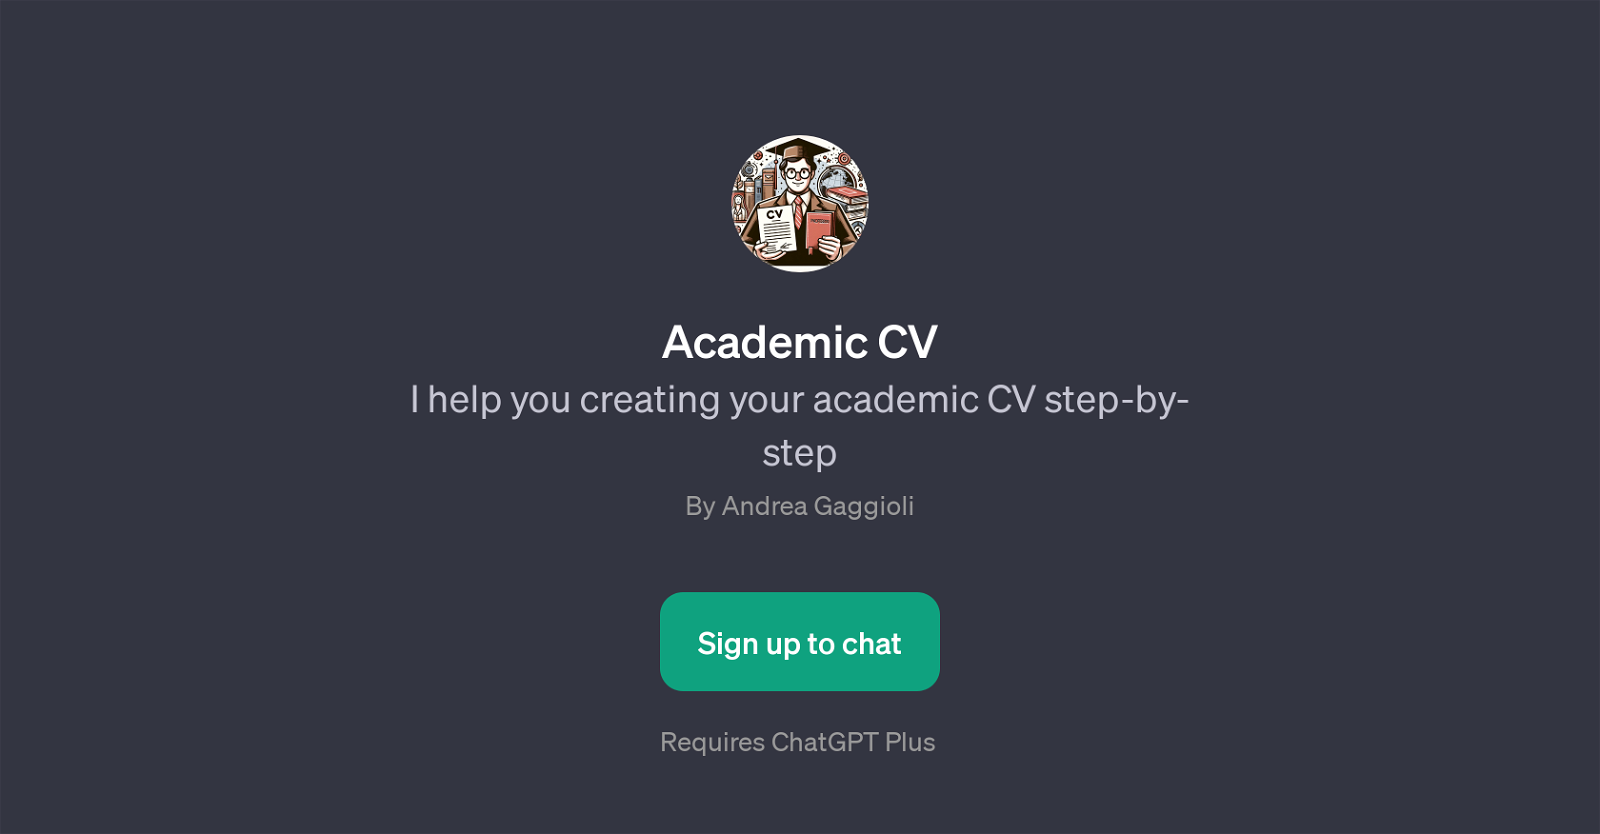 Academic CV website